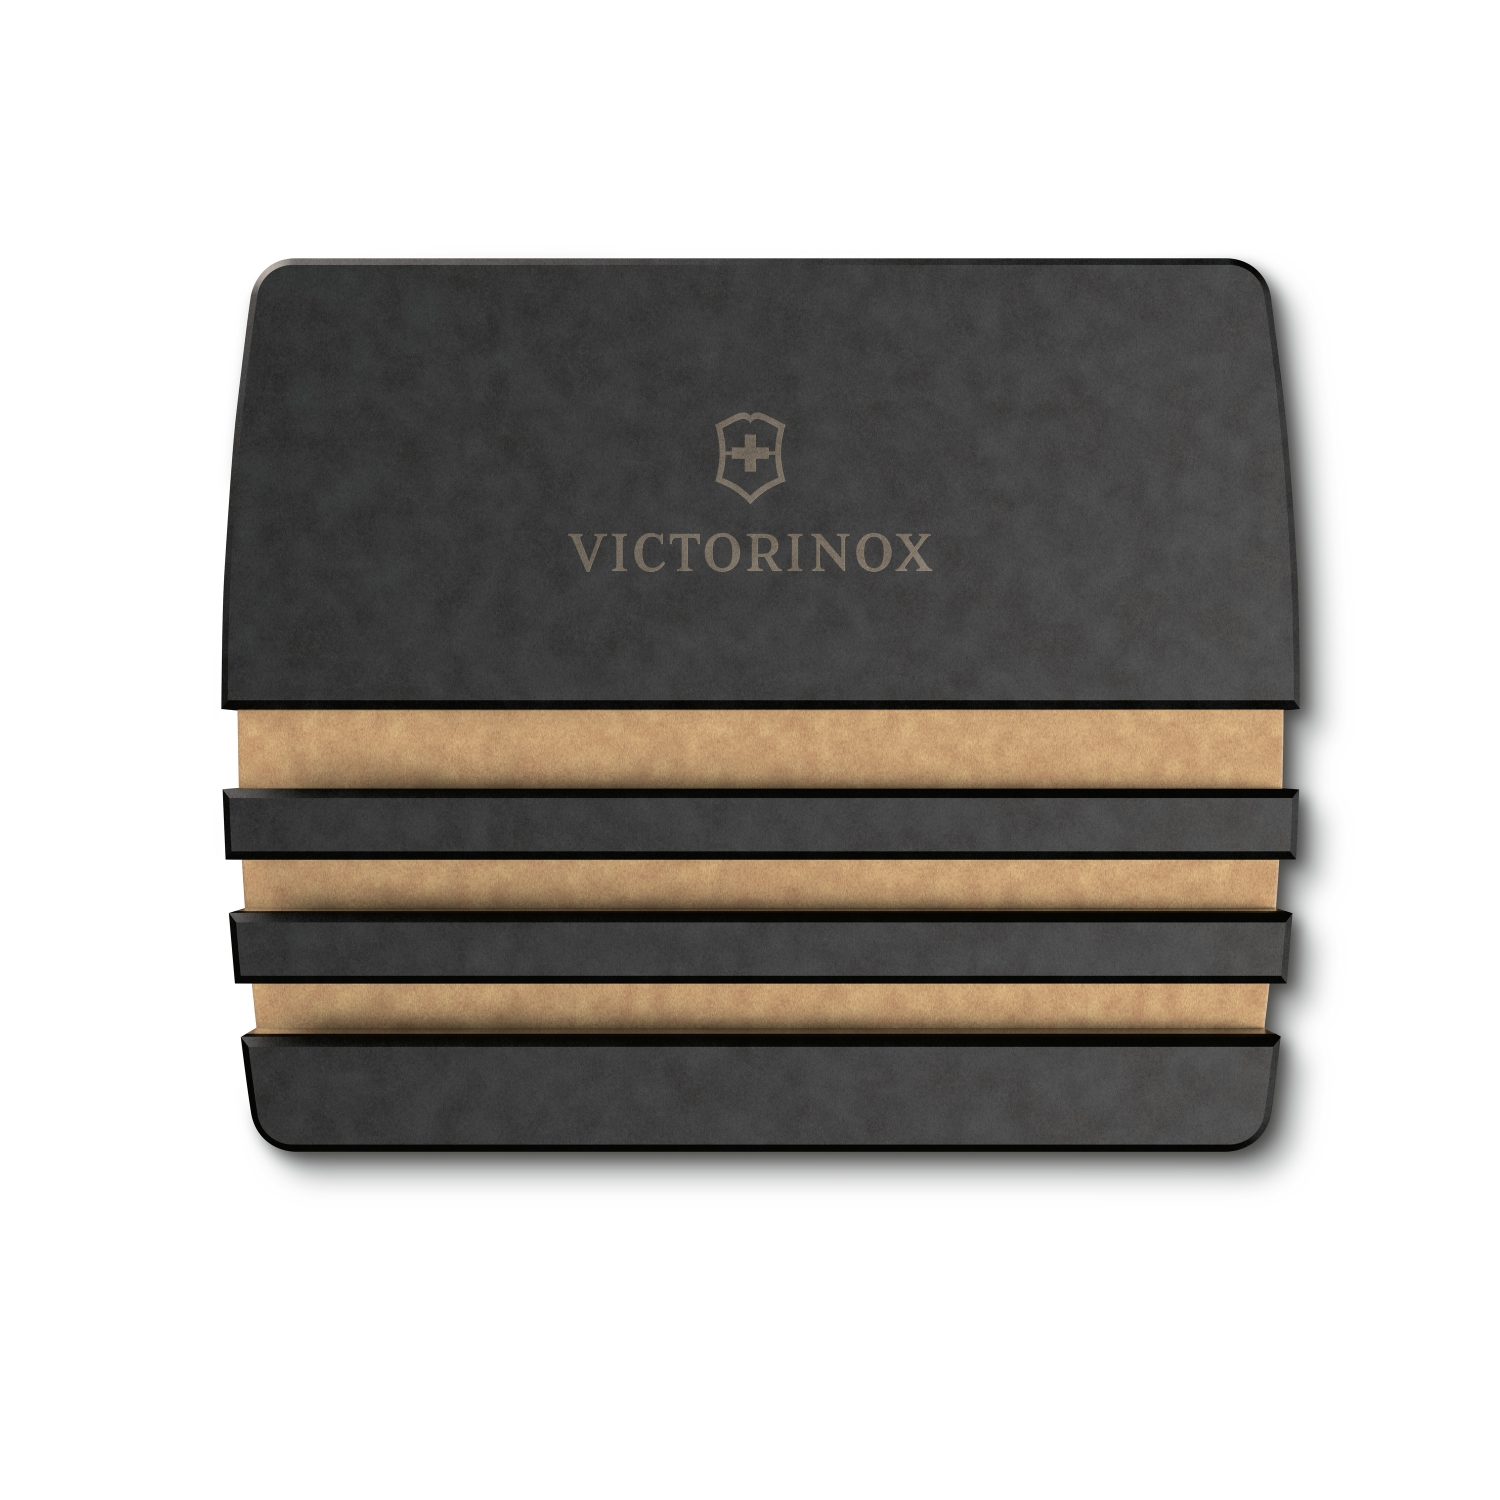 Victorinox Stojan Cutting boards stand Gourmet, black